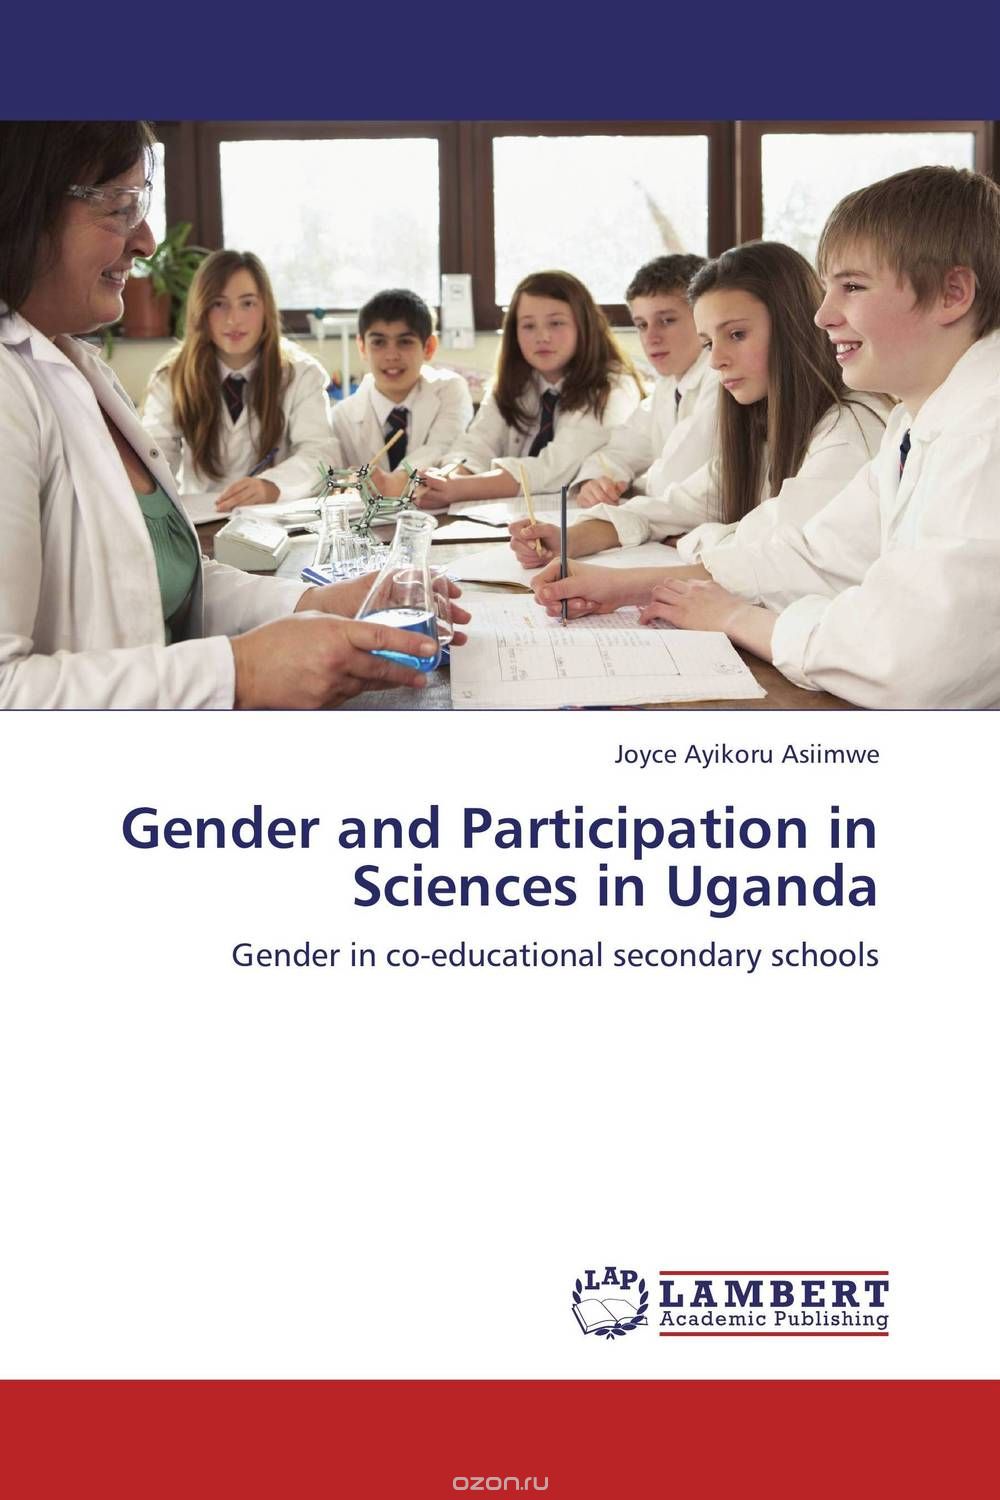 Скачать книгу "Gender and Participation in Sciences in Uganda"